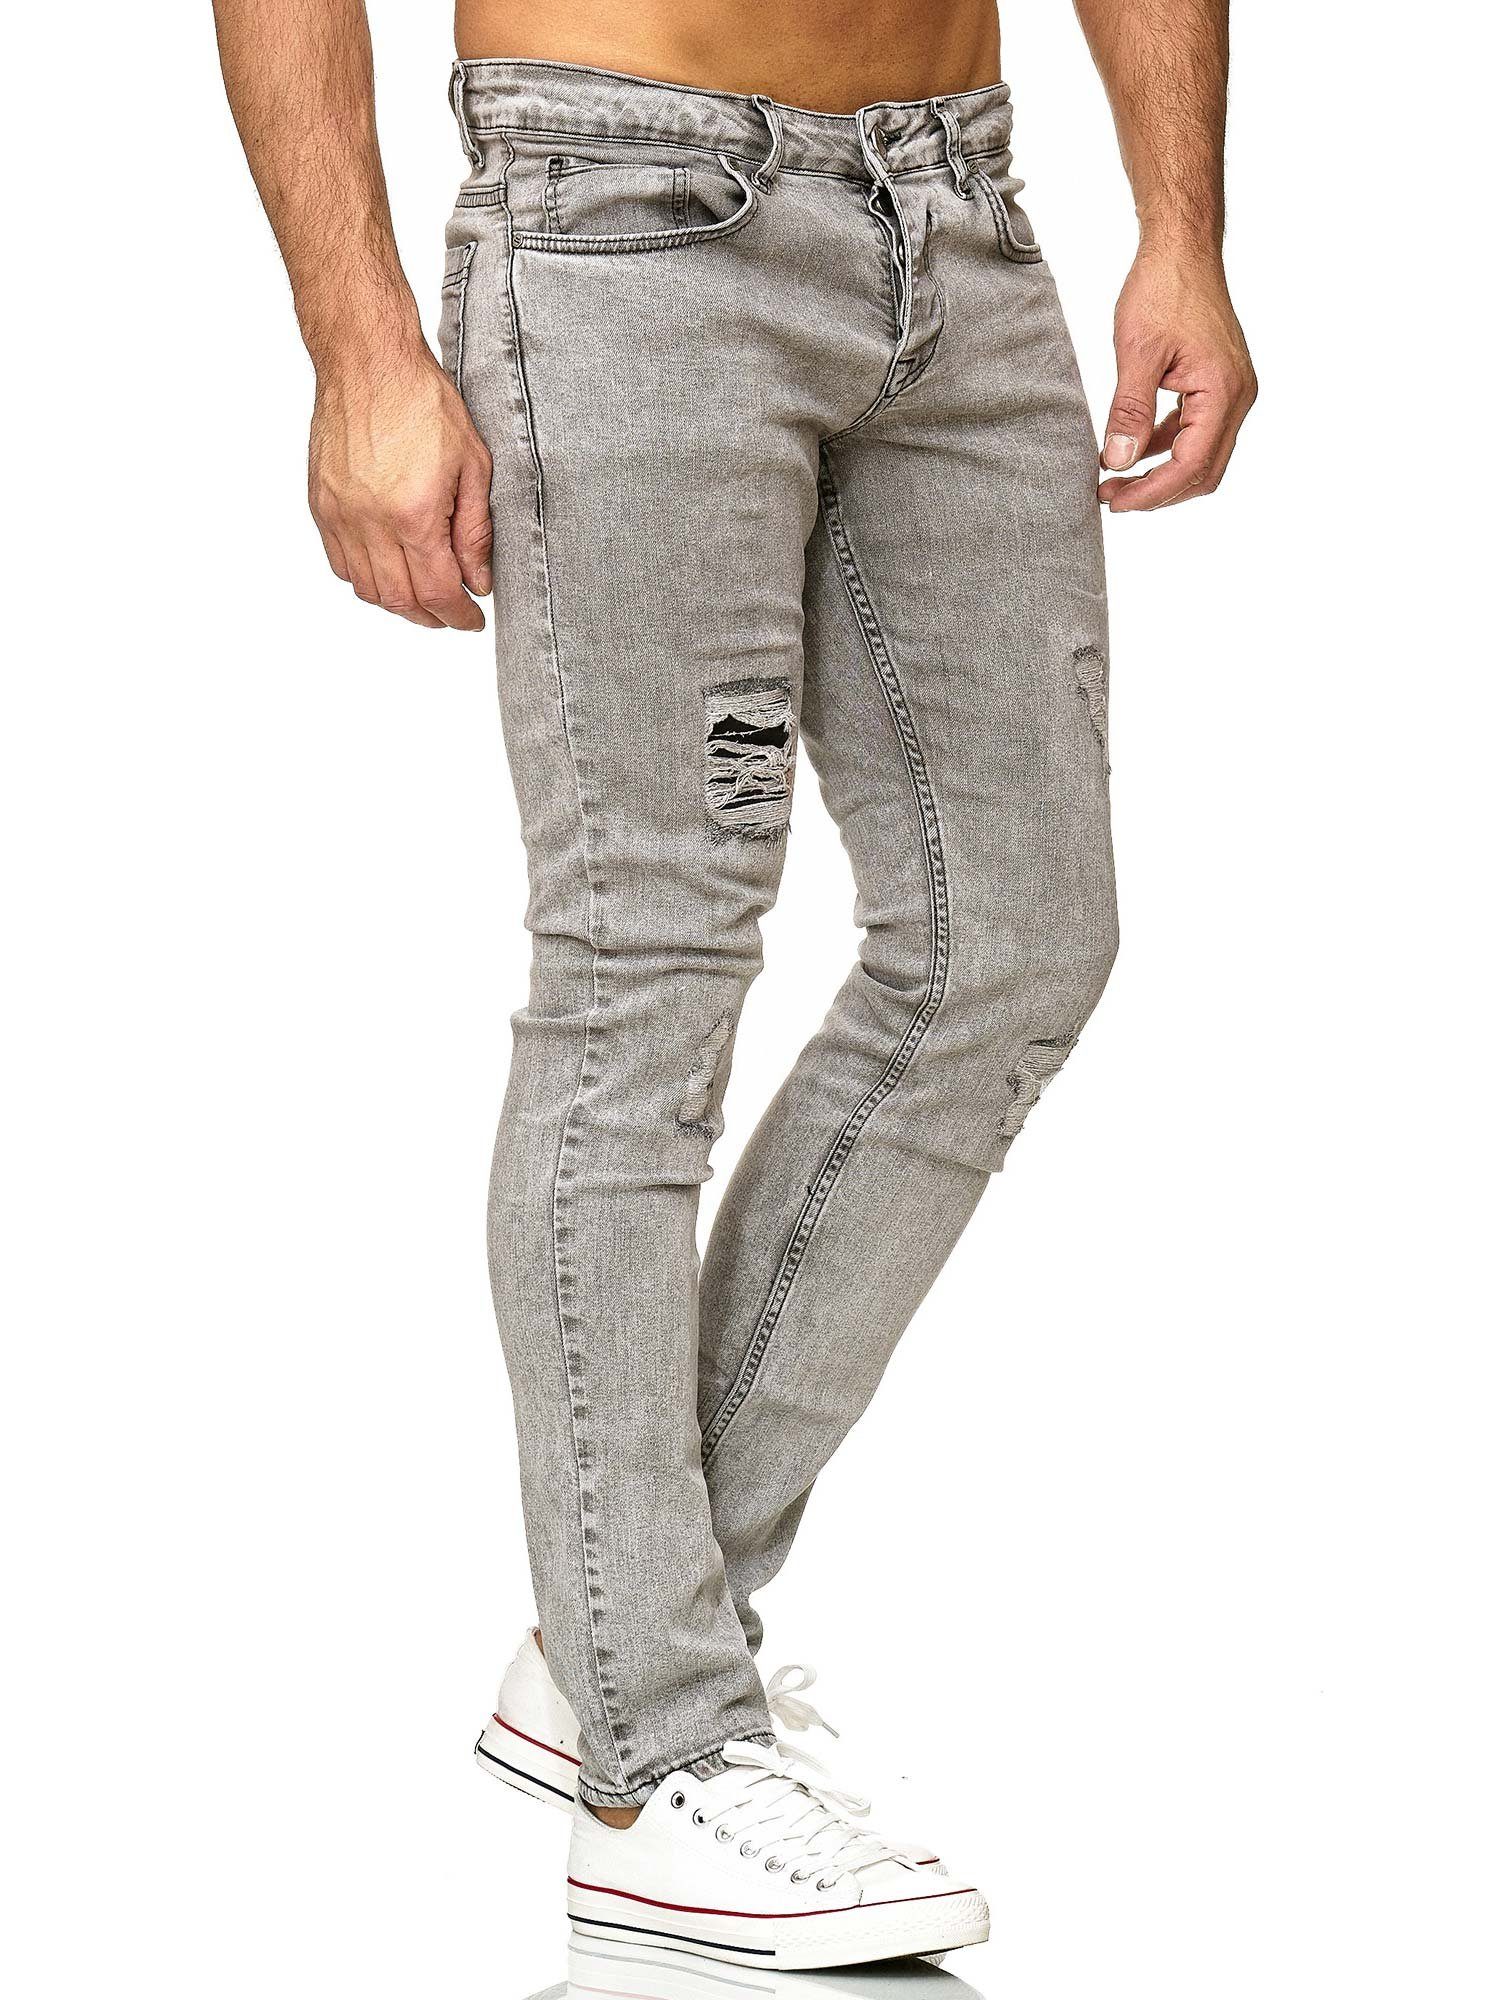 grau Slim-fit-Jeans Stretch & im 16525 Tazzio Destroyed-Look Elasthan mit